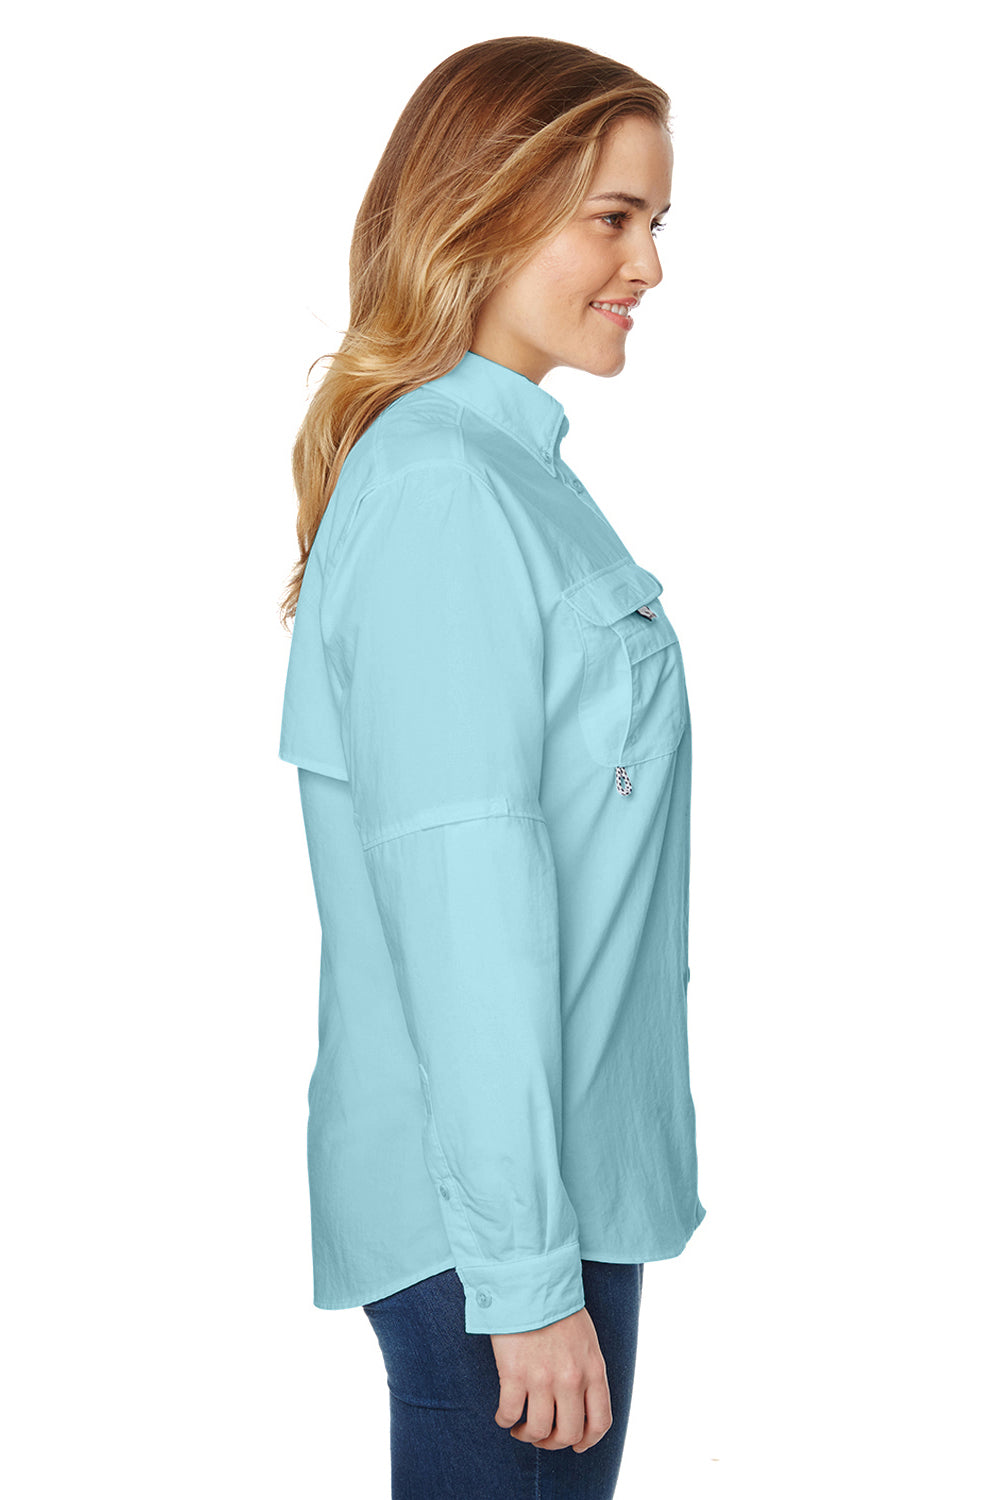 Columbia 7314 Womens Bahama Moisture Wicking Long Sleeve Button Down Shirt w/ Double Pockets Clear Blue Side